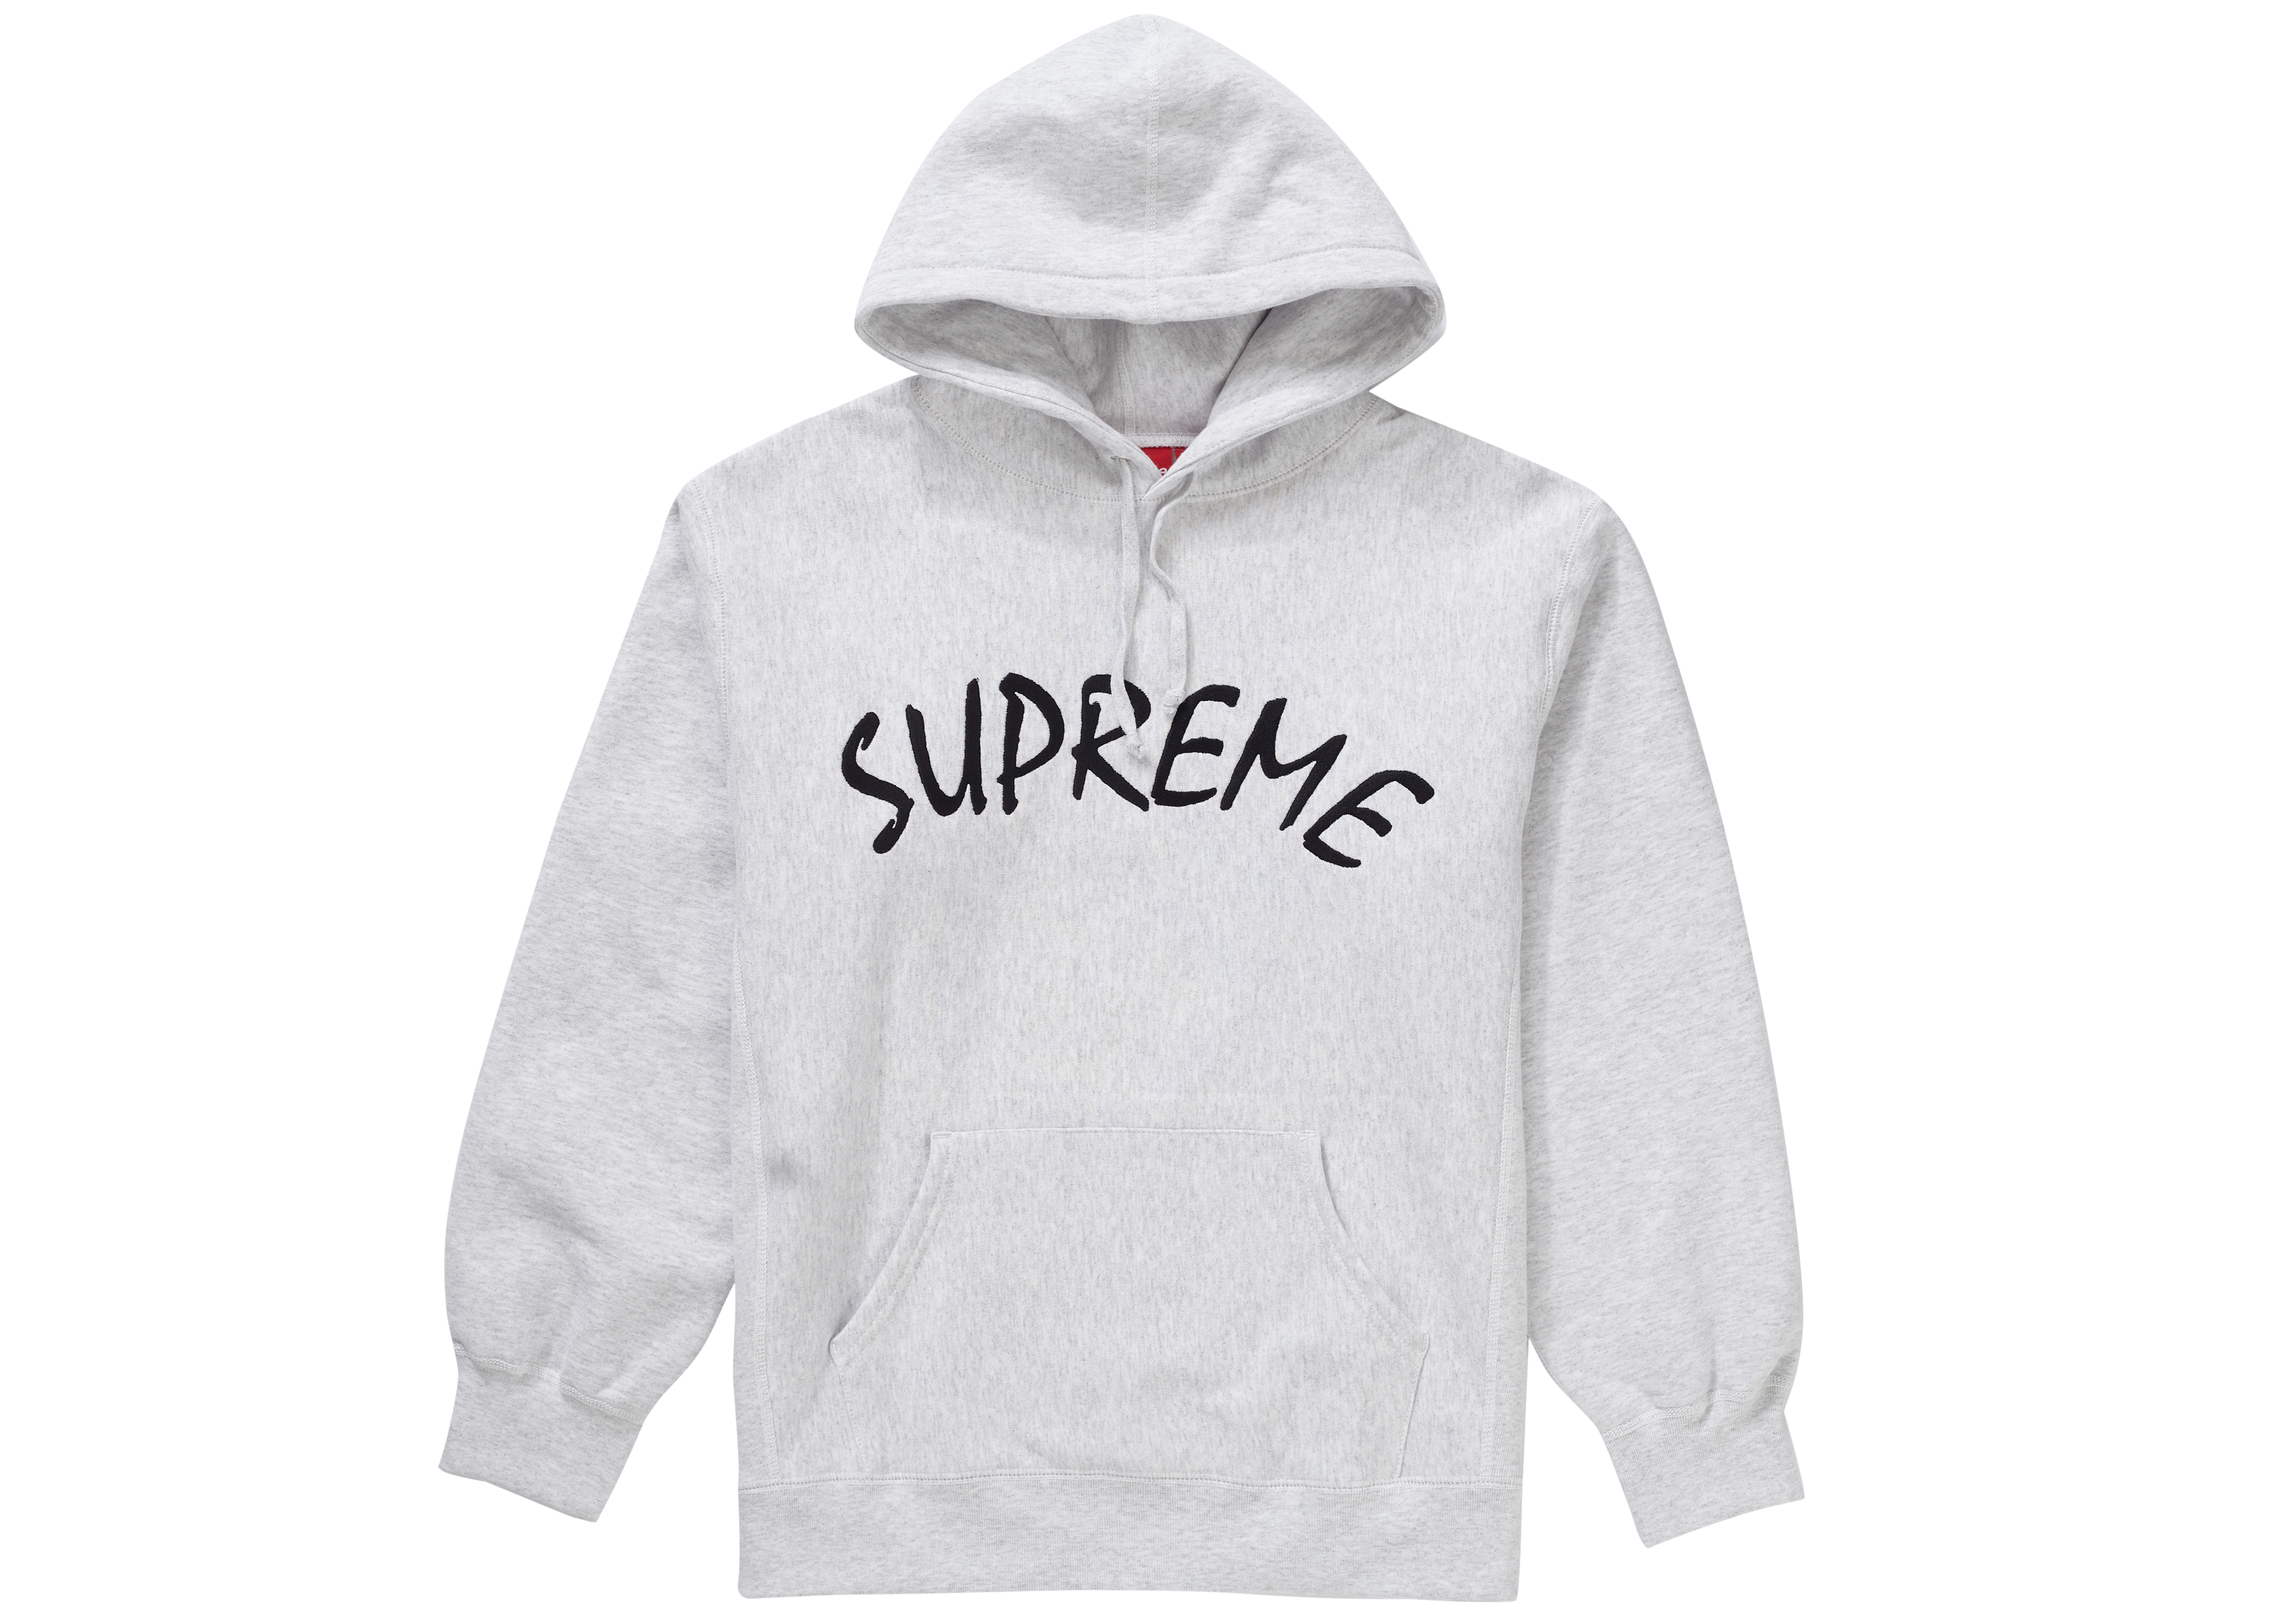 Supreme FTP Arc Hooded Sweatshirt Ash Grey